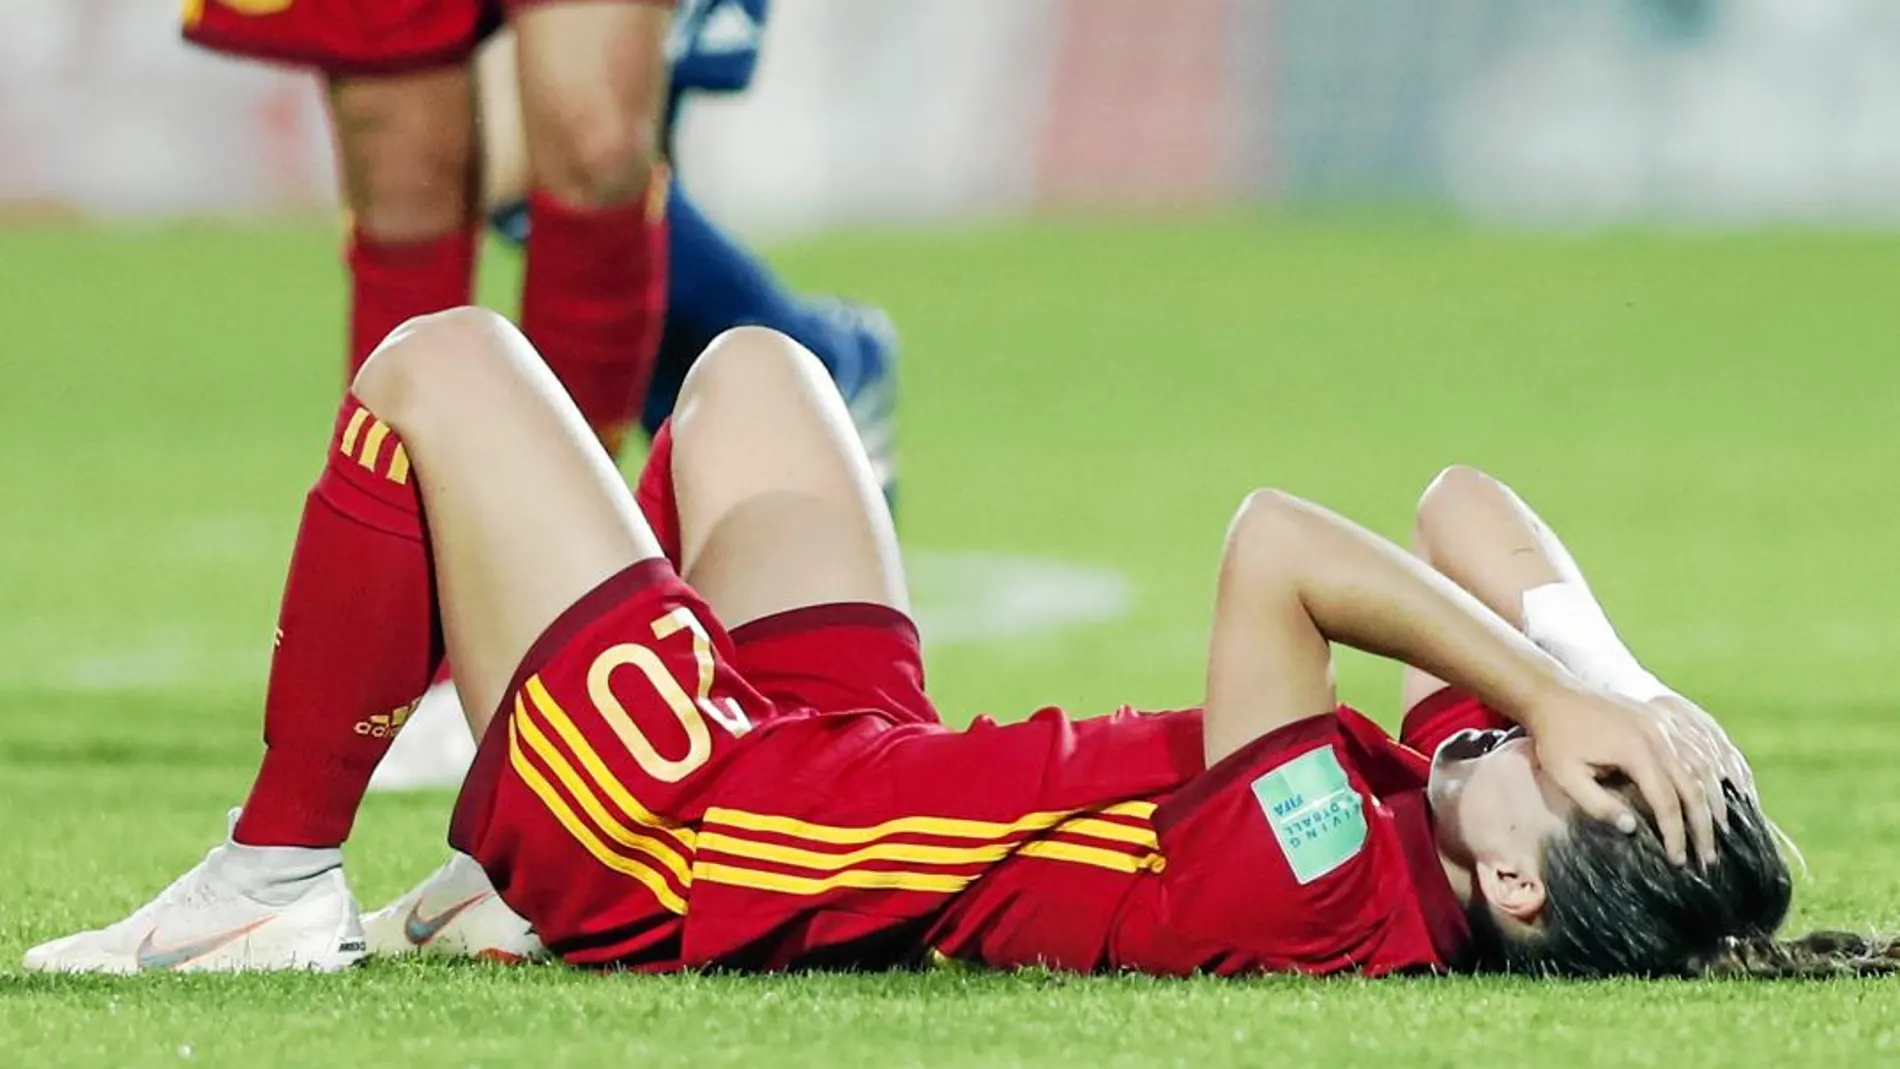 La atacante Claudia Pina, tumbada en el césped después del final del partido. Se les escapó el título Mundial / Efe